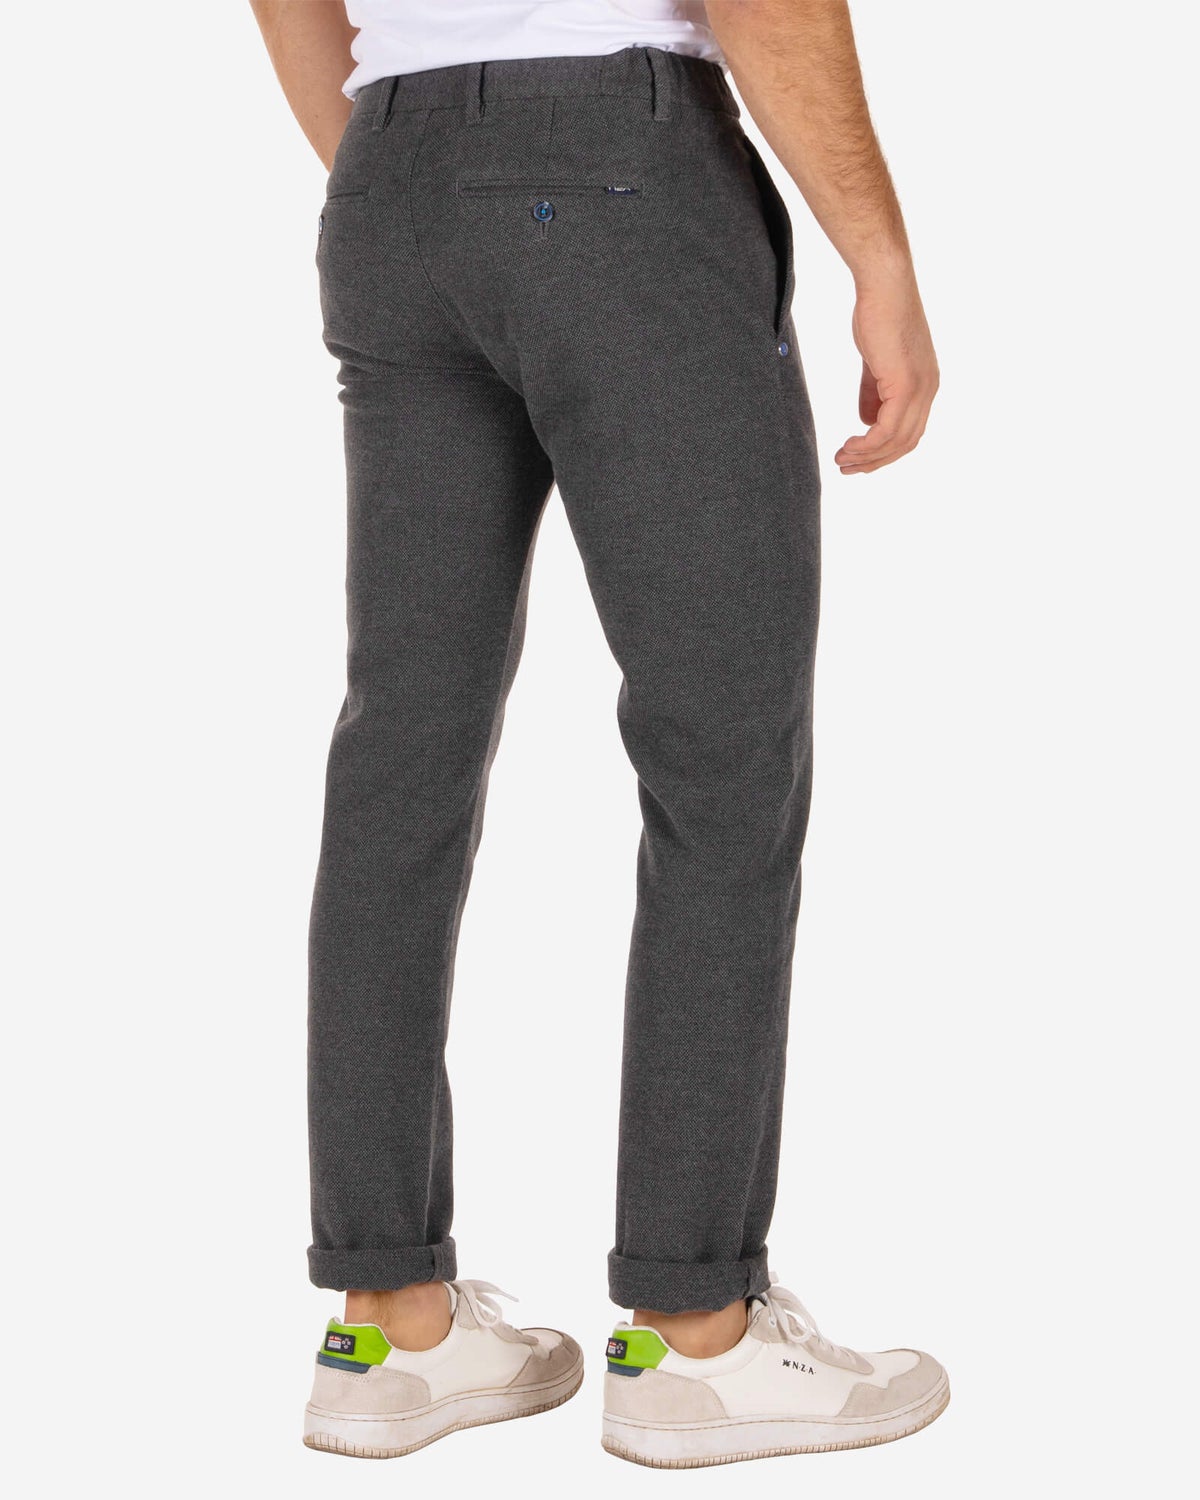 Pantalones deportivas Napier Relaxed Plain - Concrete Grey